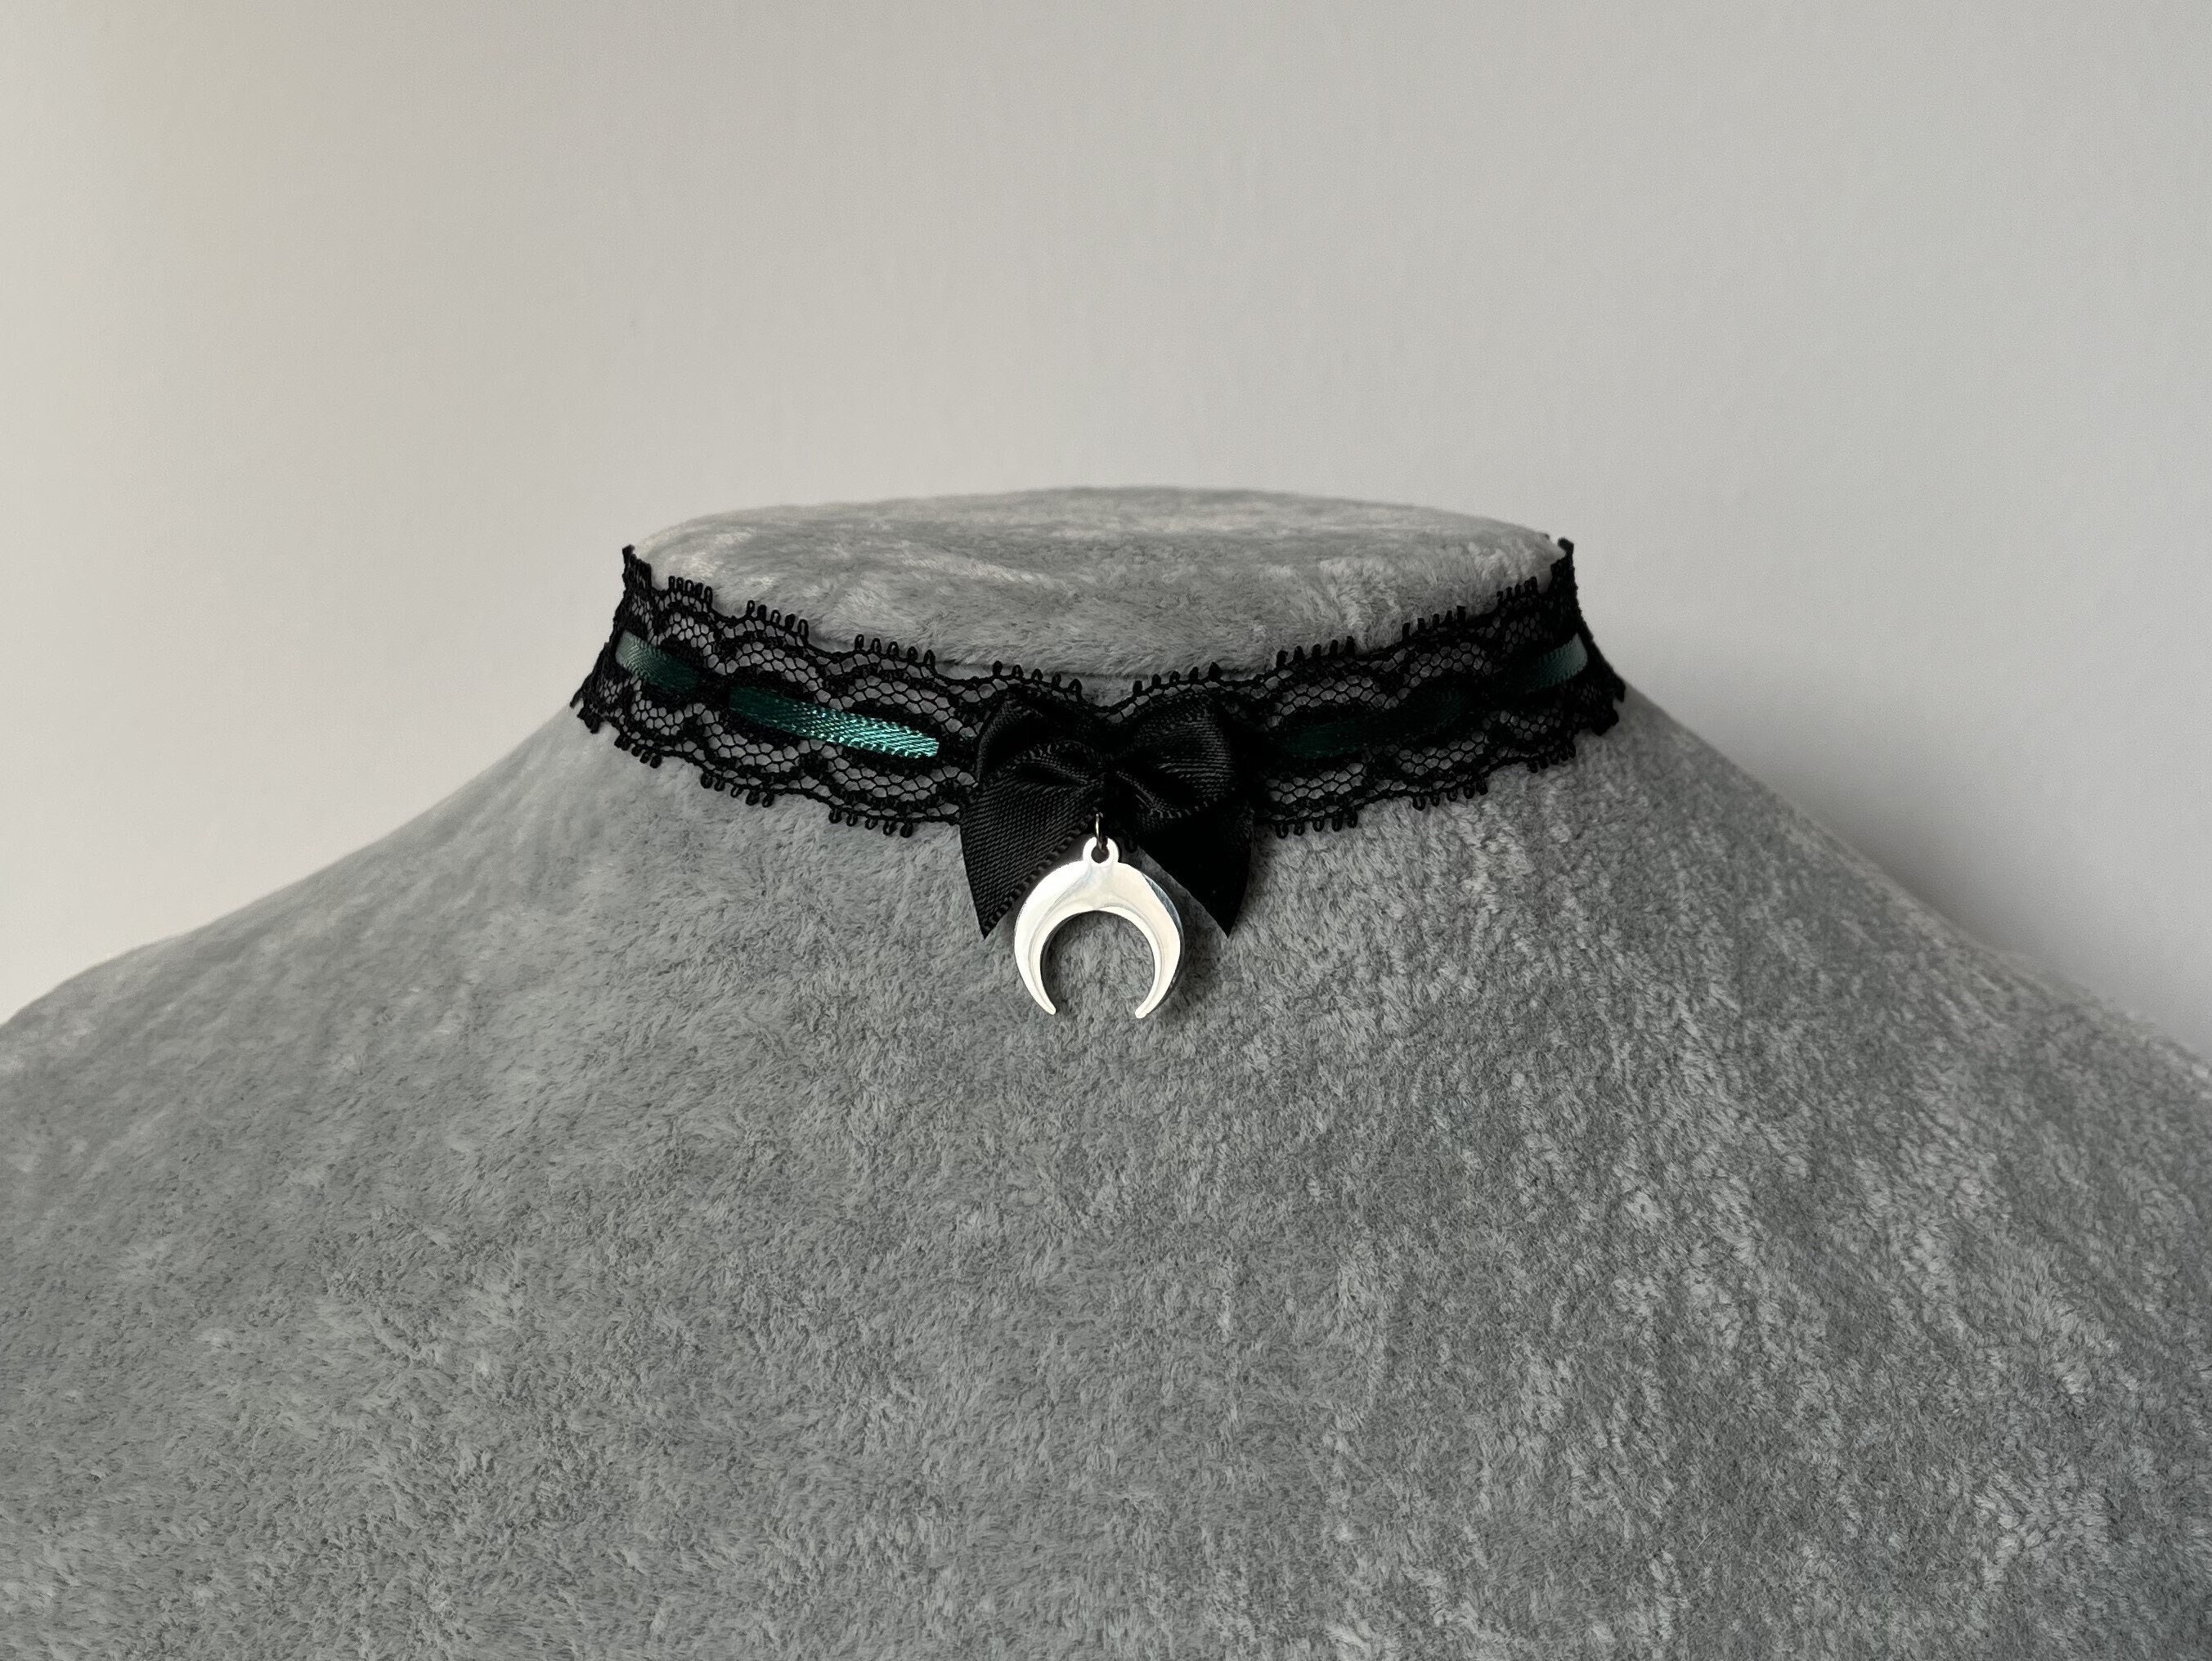 Nyx Black Beaded Crochet Collar